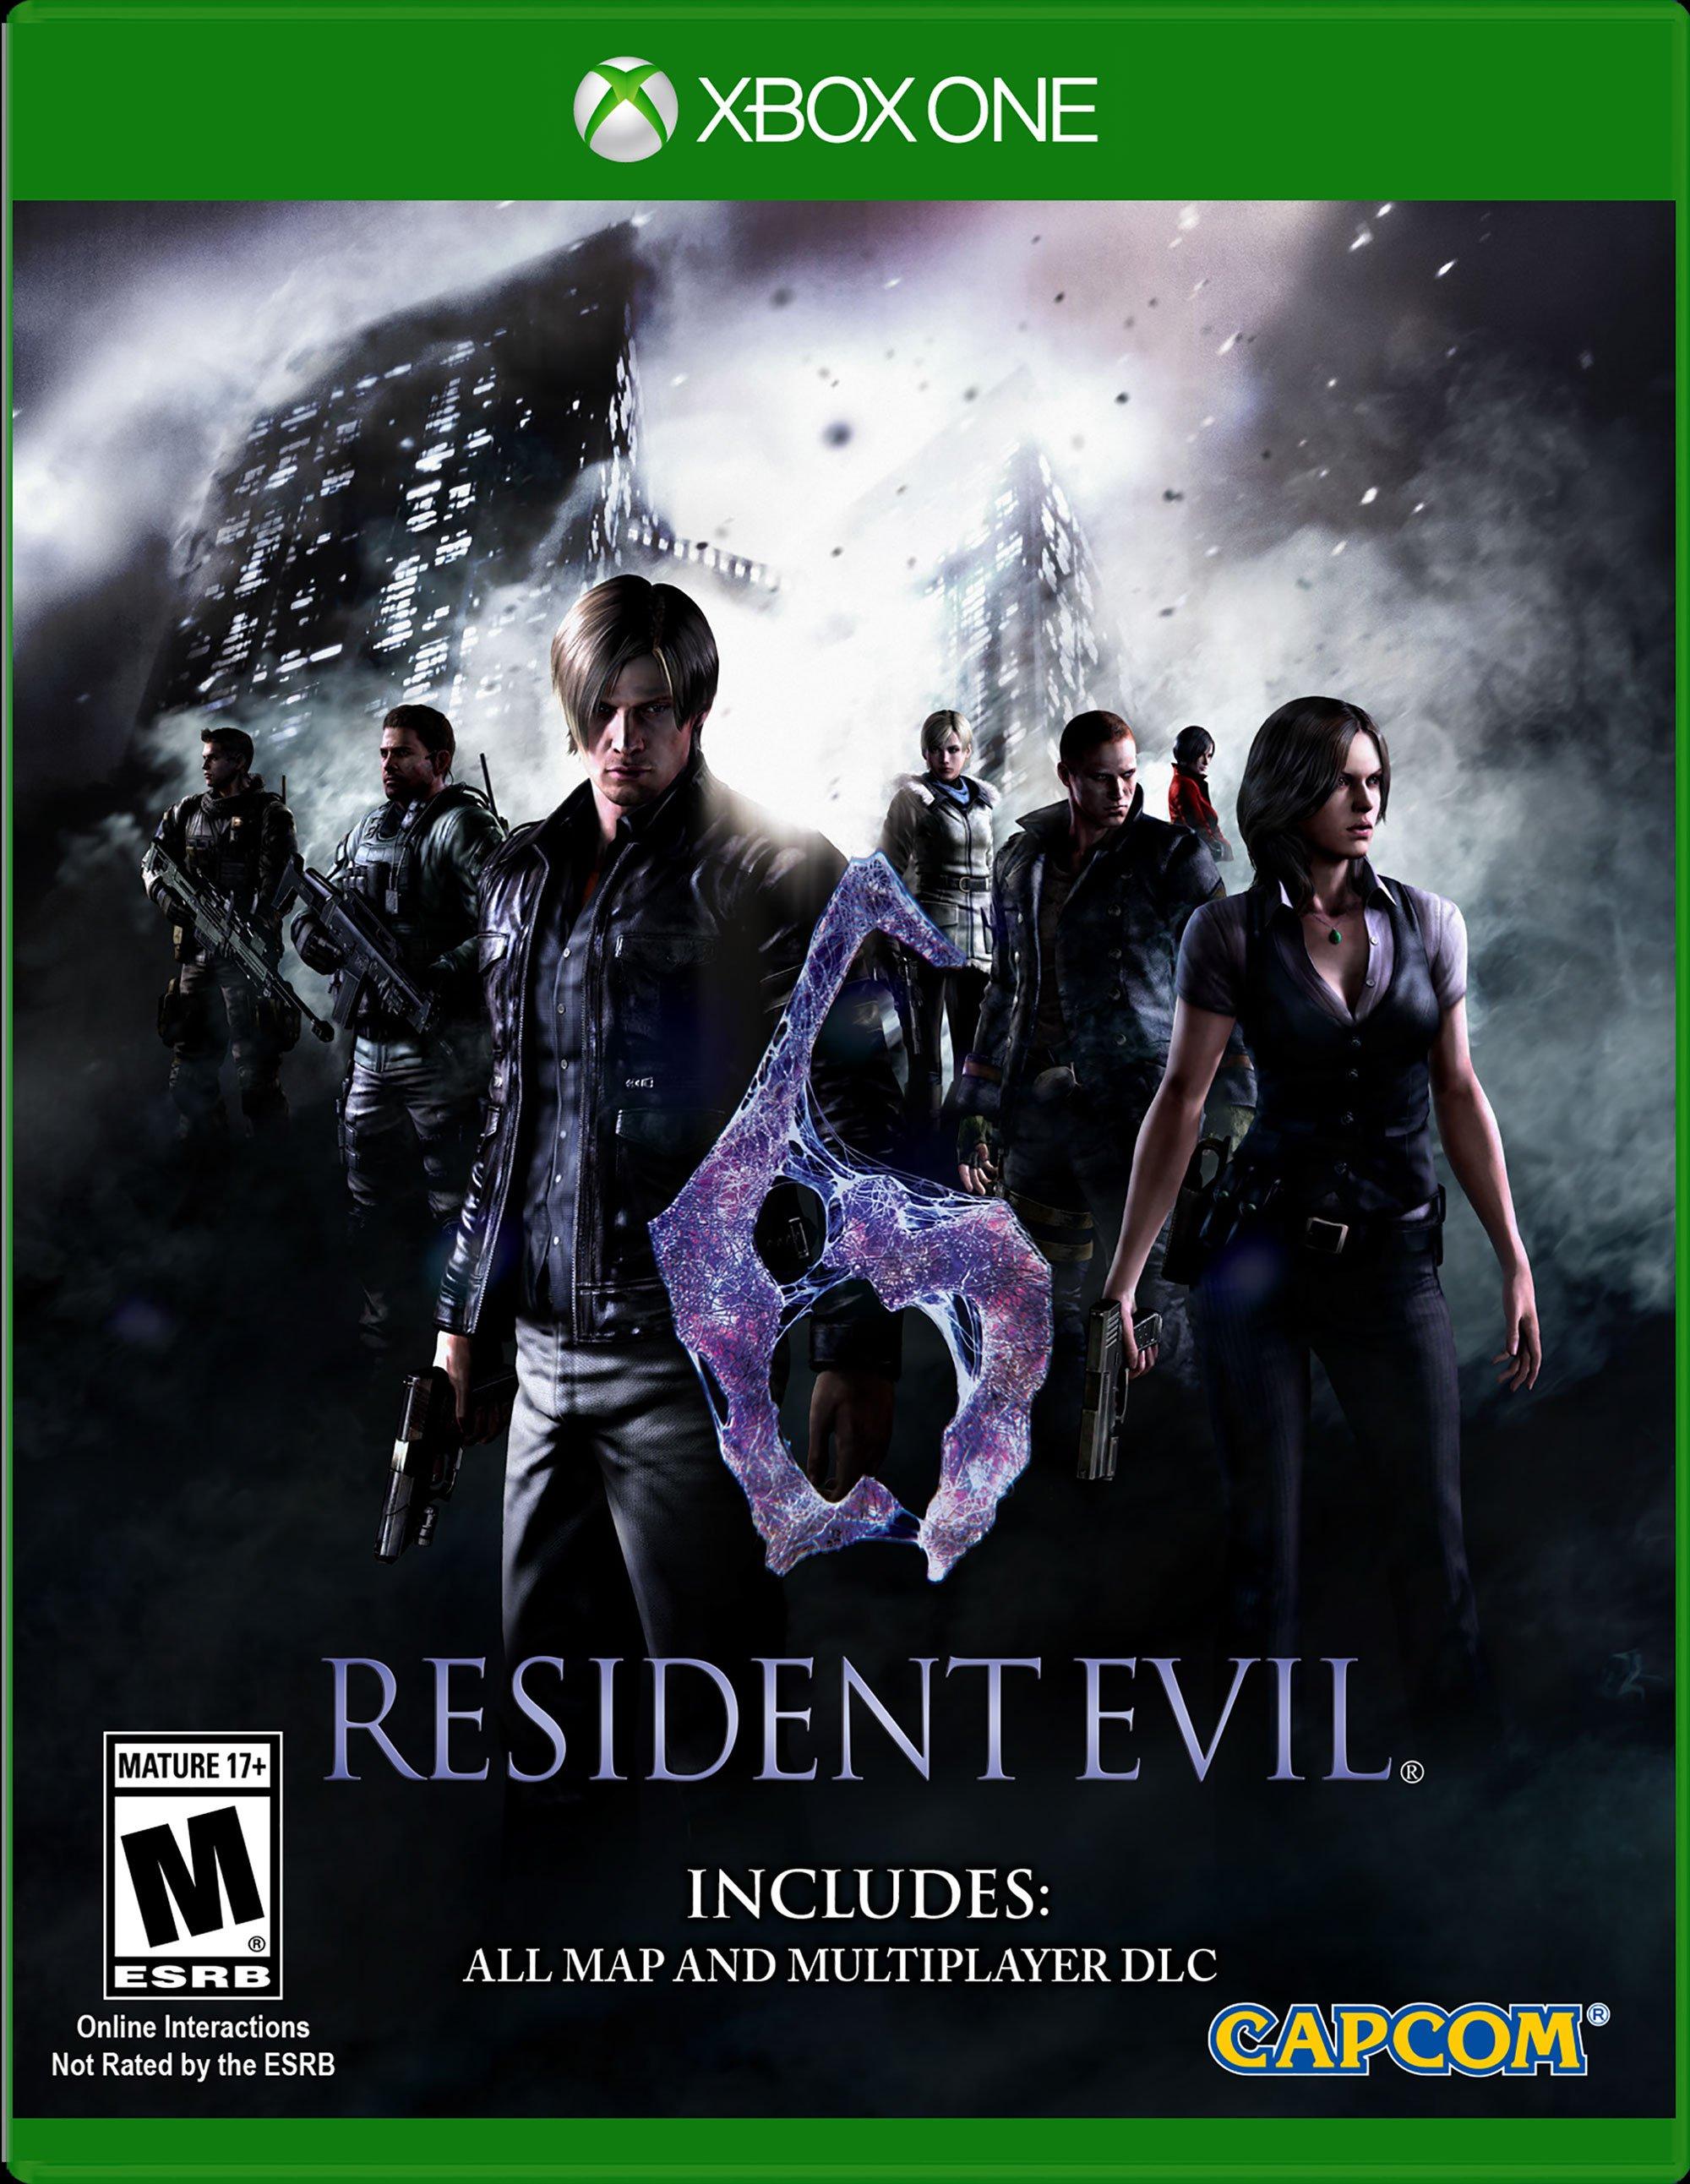 25 Hidden Details In The Resident Evil 2 Reboot Only True Fans Noticed